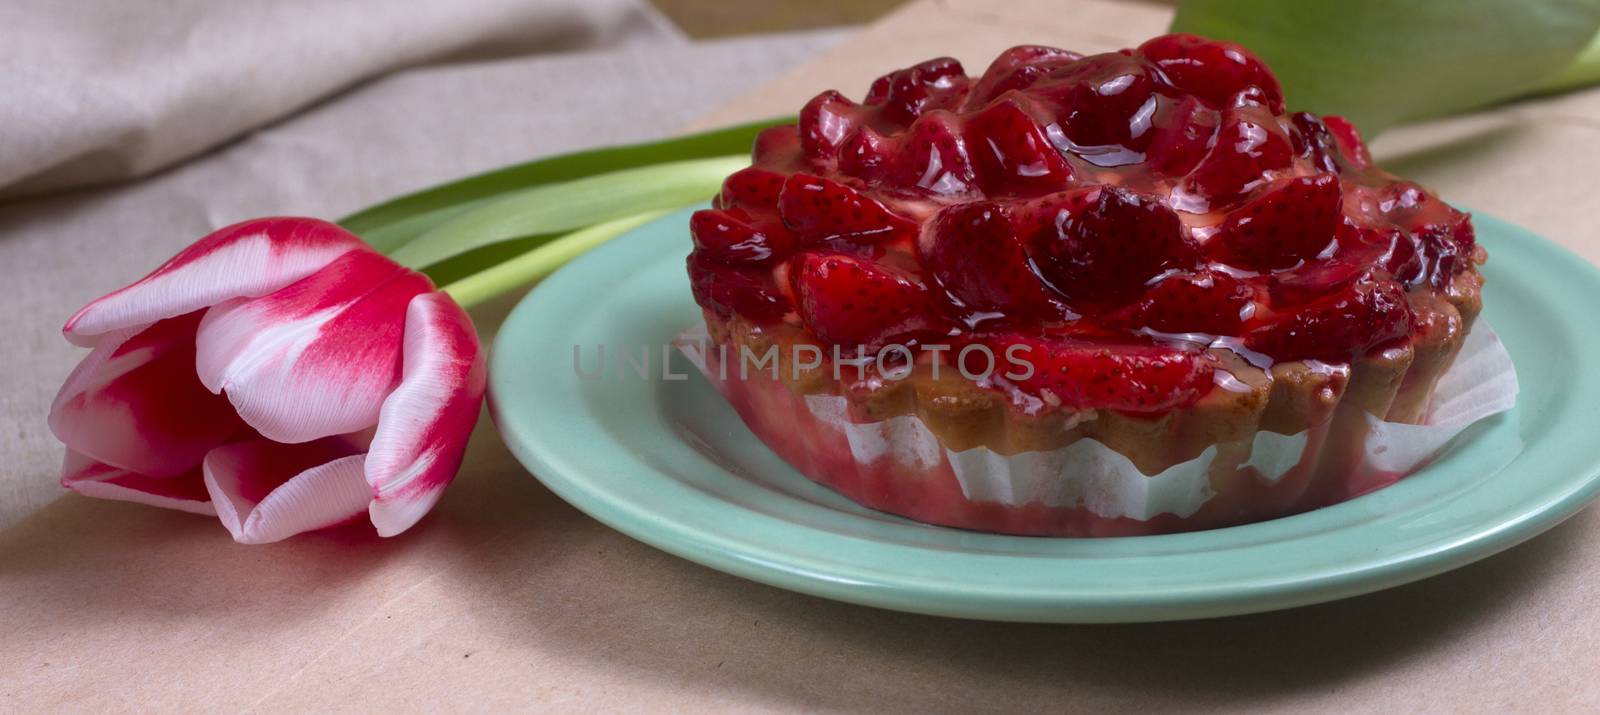 fresh strawberry tart on a plate by victosha